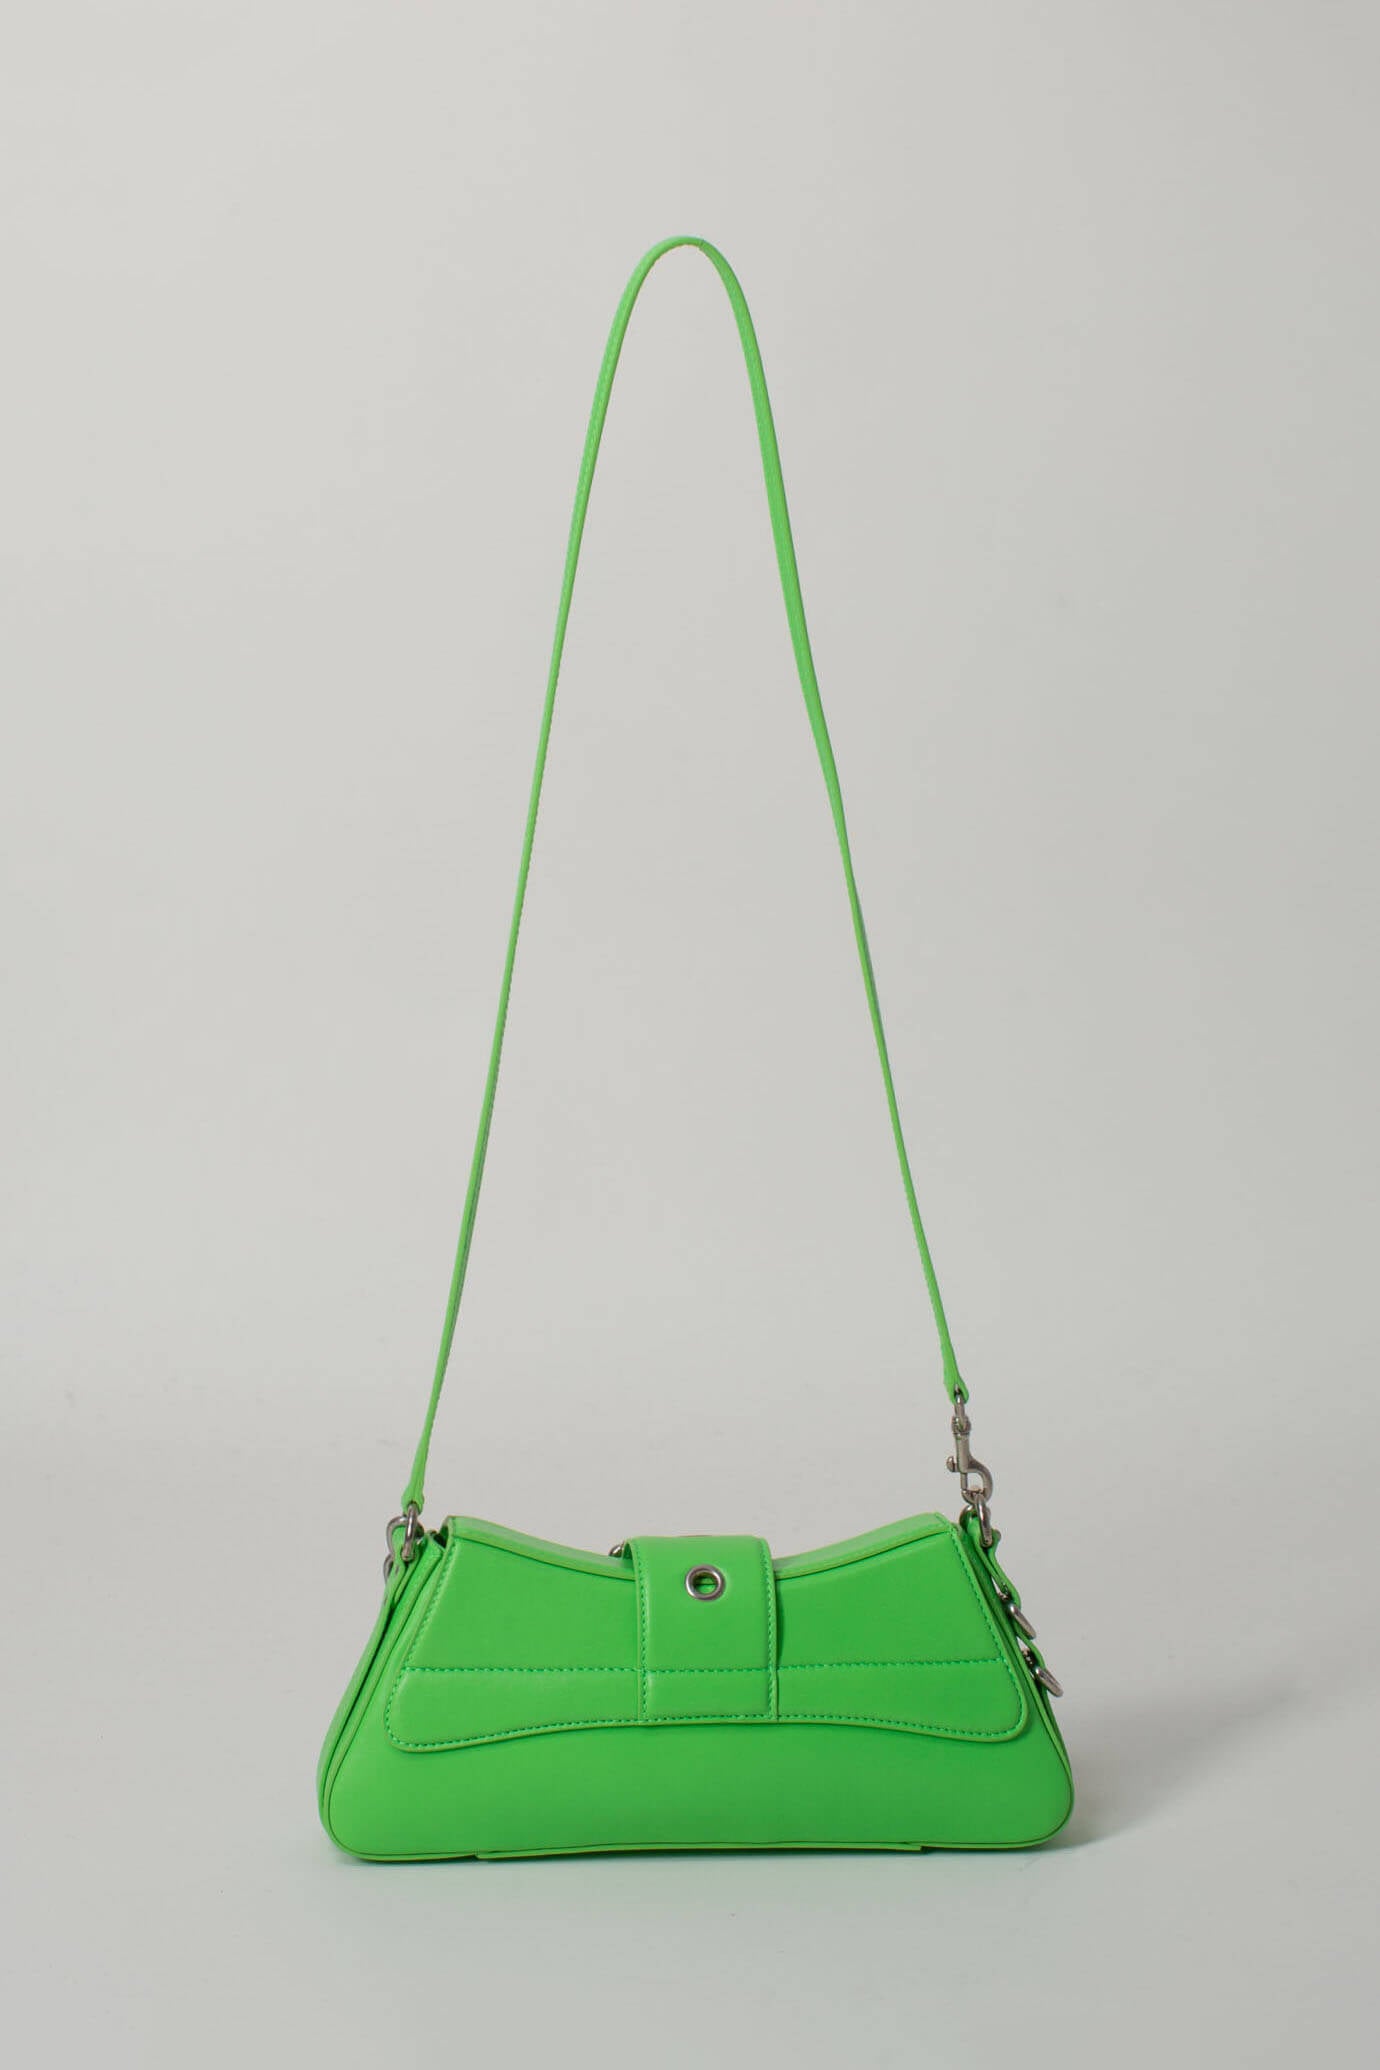 Green Lindsay S leather shoulder bag, Balenciaga